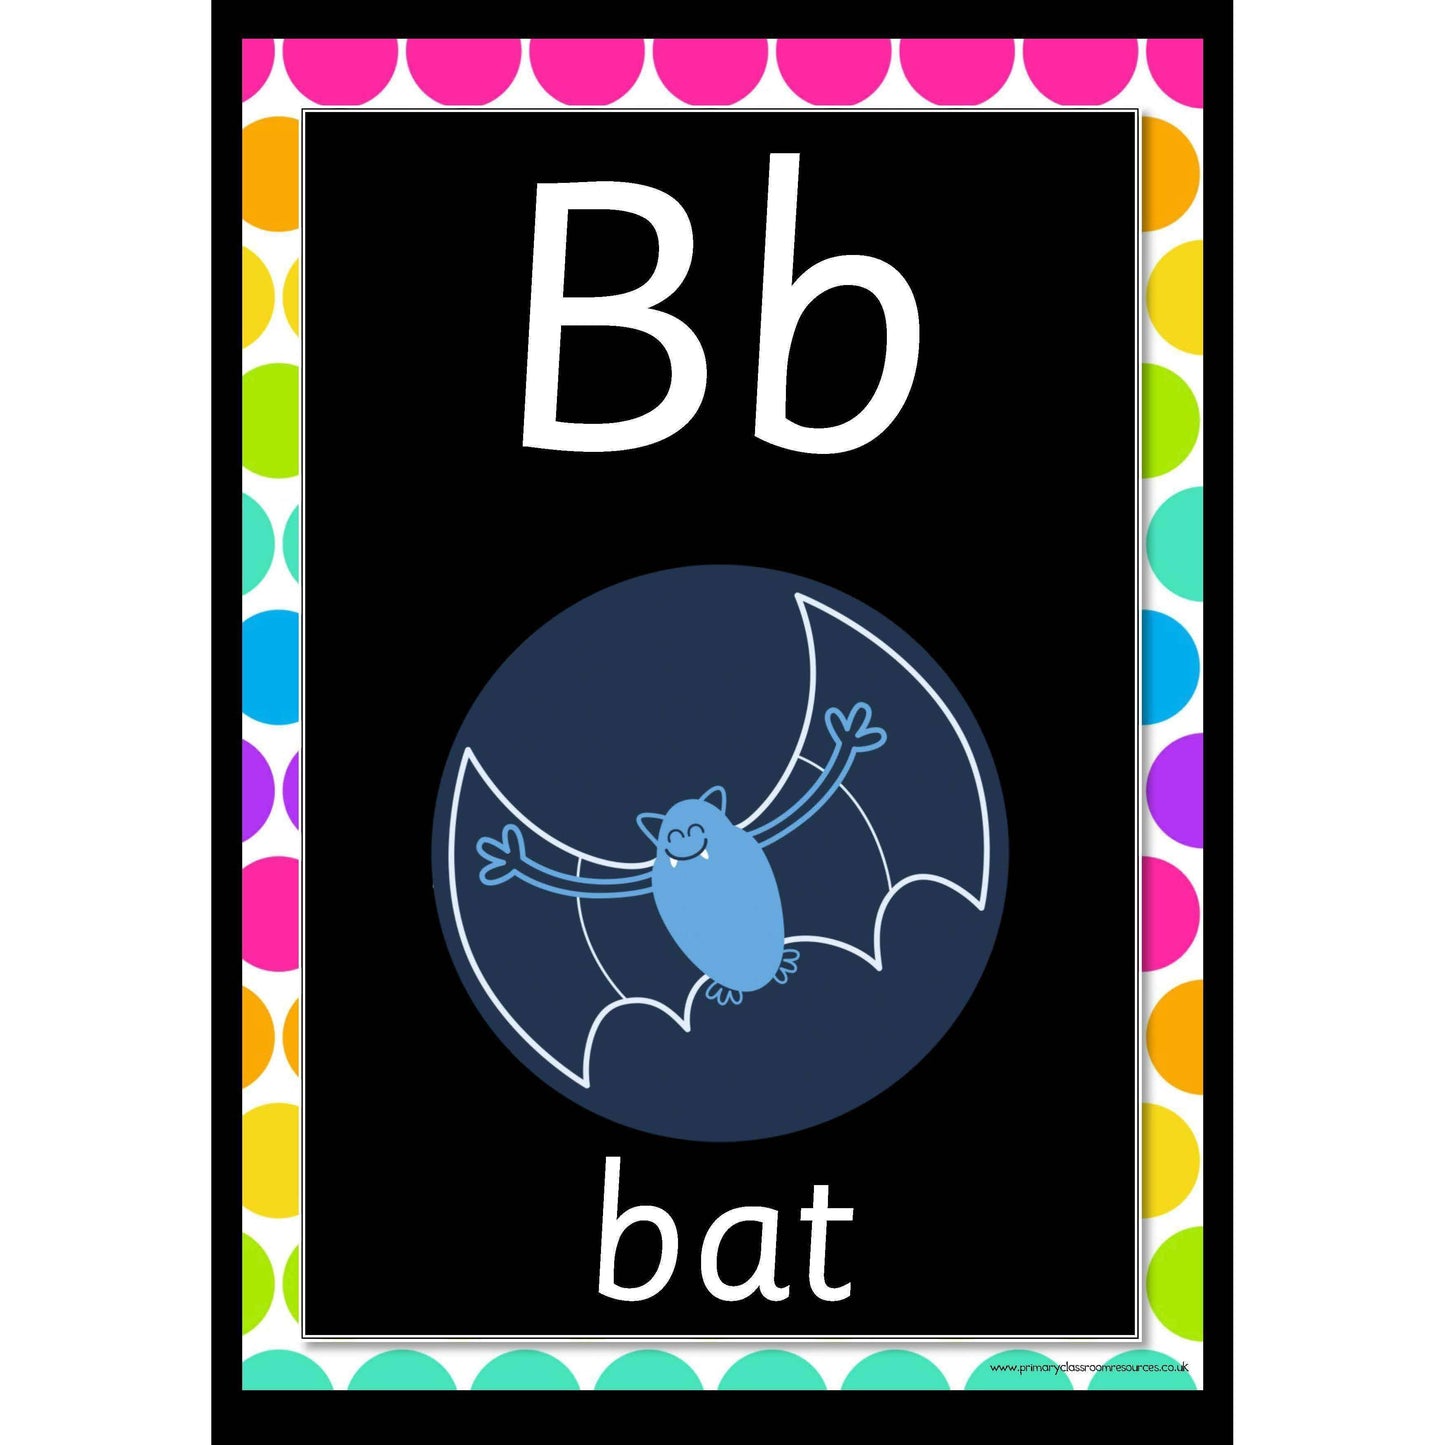 Rainbow Blackboard Alphabet Posters:Primary Classroom Resources